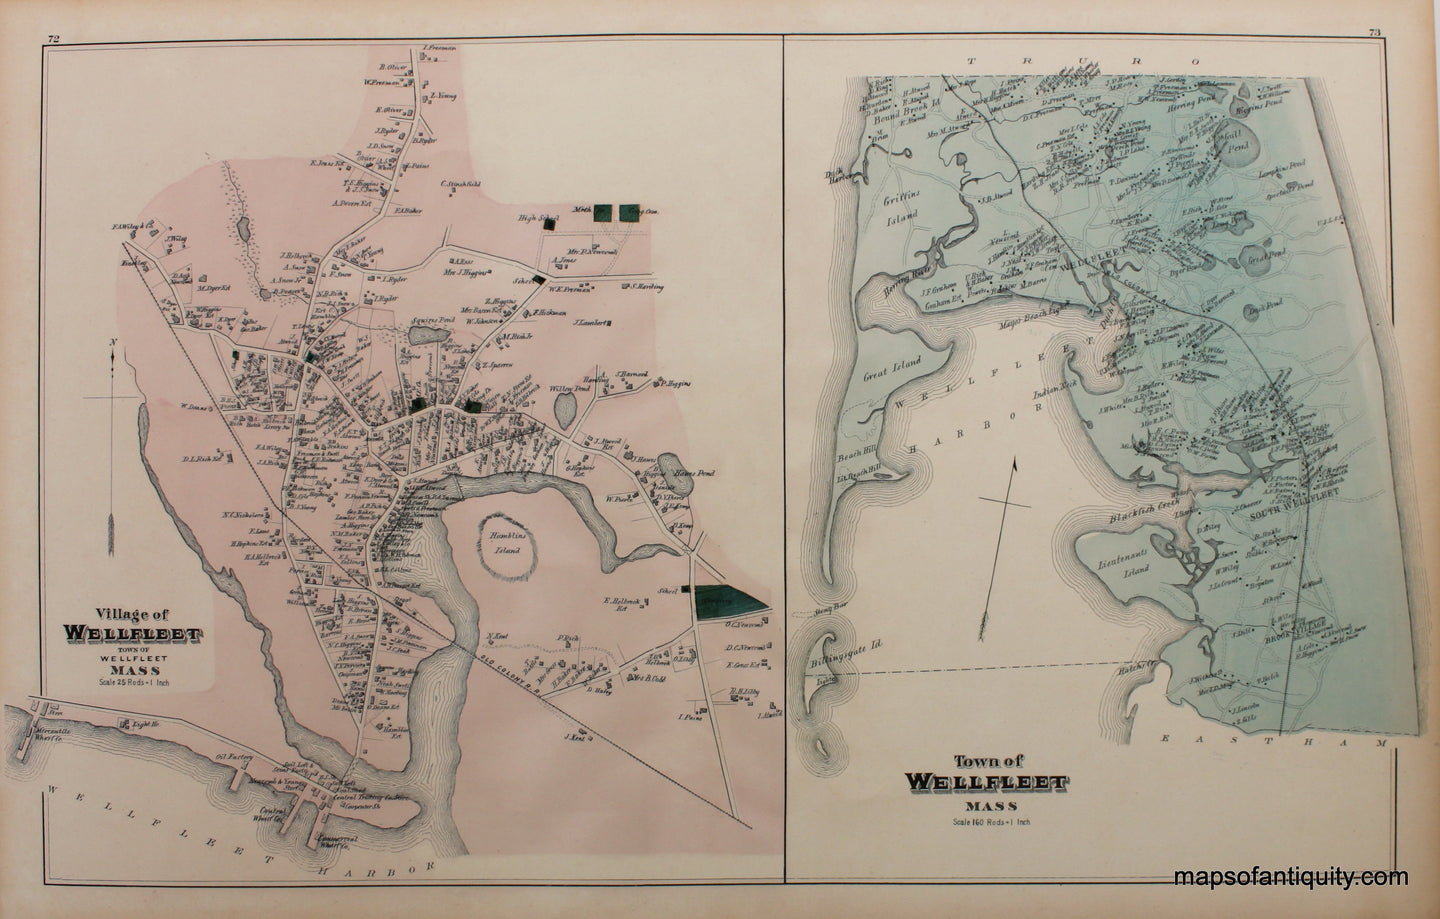 Reproduction-Village-of-Wellfleet-Town-of-Wellfleet-pp.-72-73-Town-and-Village-Maps-Atlas-of-Barnstable-County-Walker-1880.---Reproduction---Reproduction-Cape-Cod-and-Islands-Reproduction--Maps-Of-Antiquity